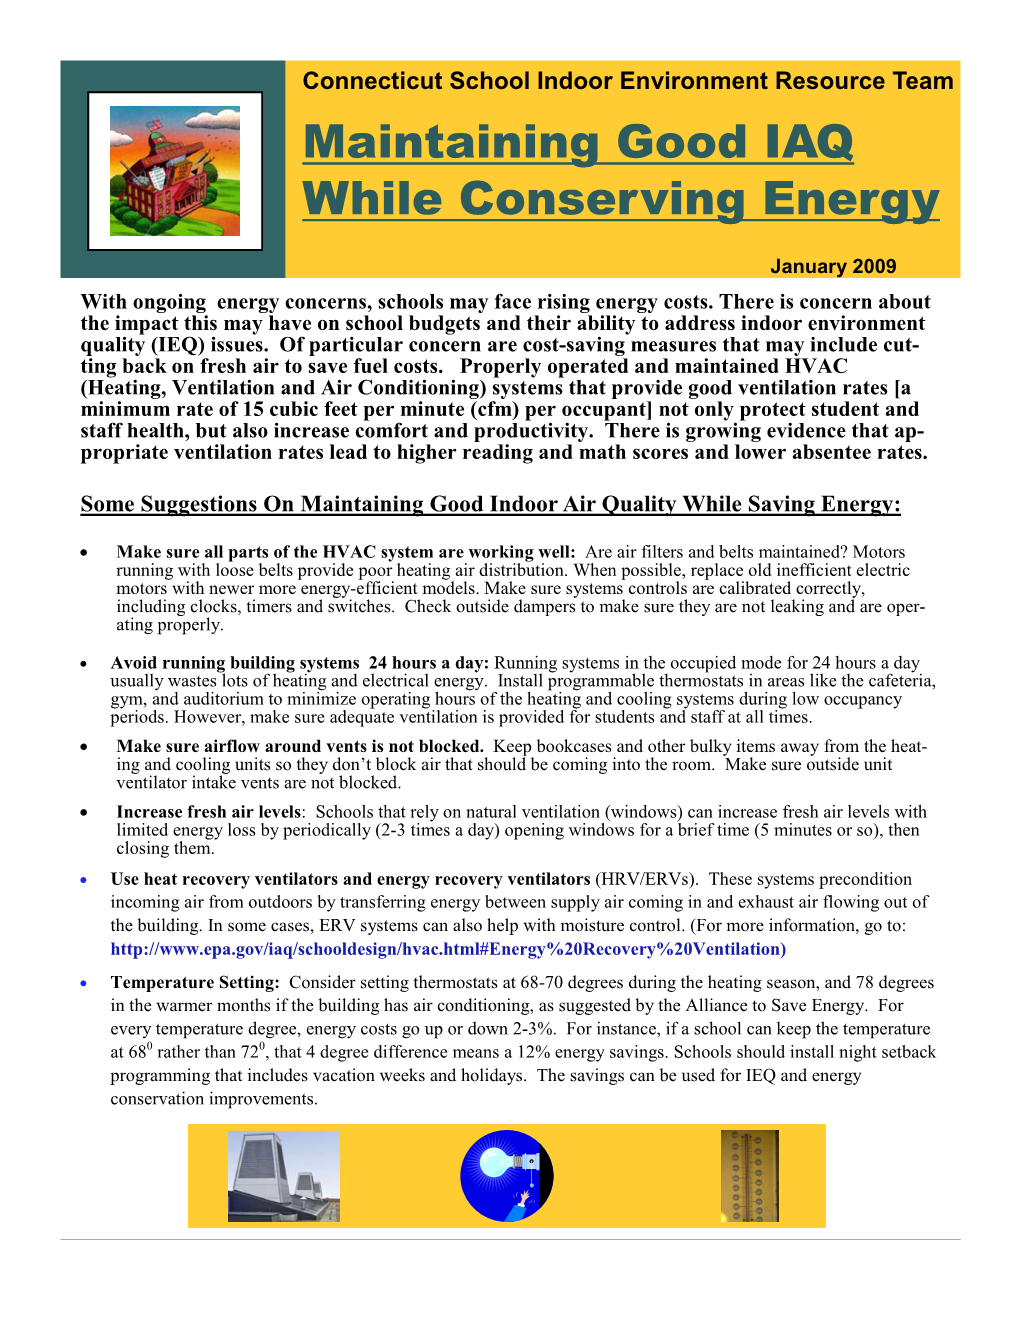 Energy Conservation Fact Sheet